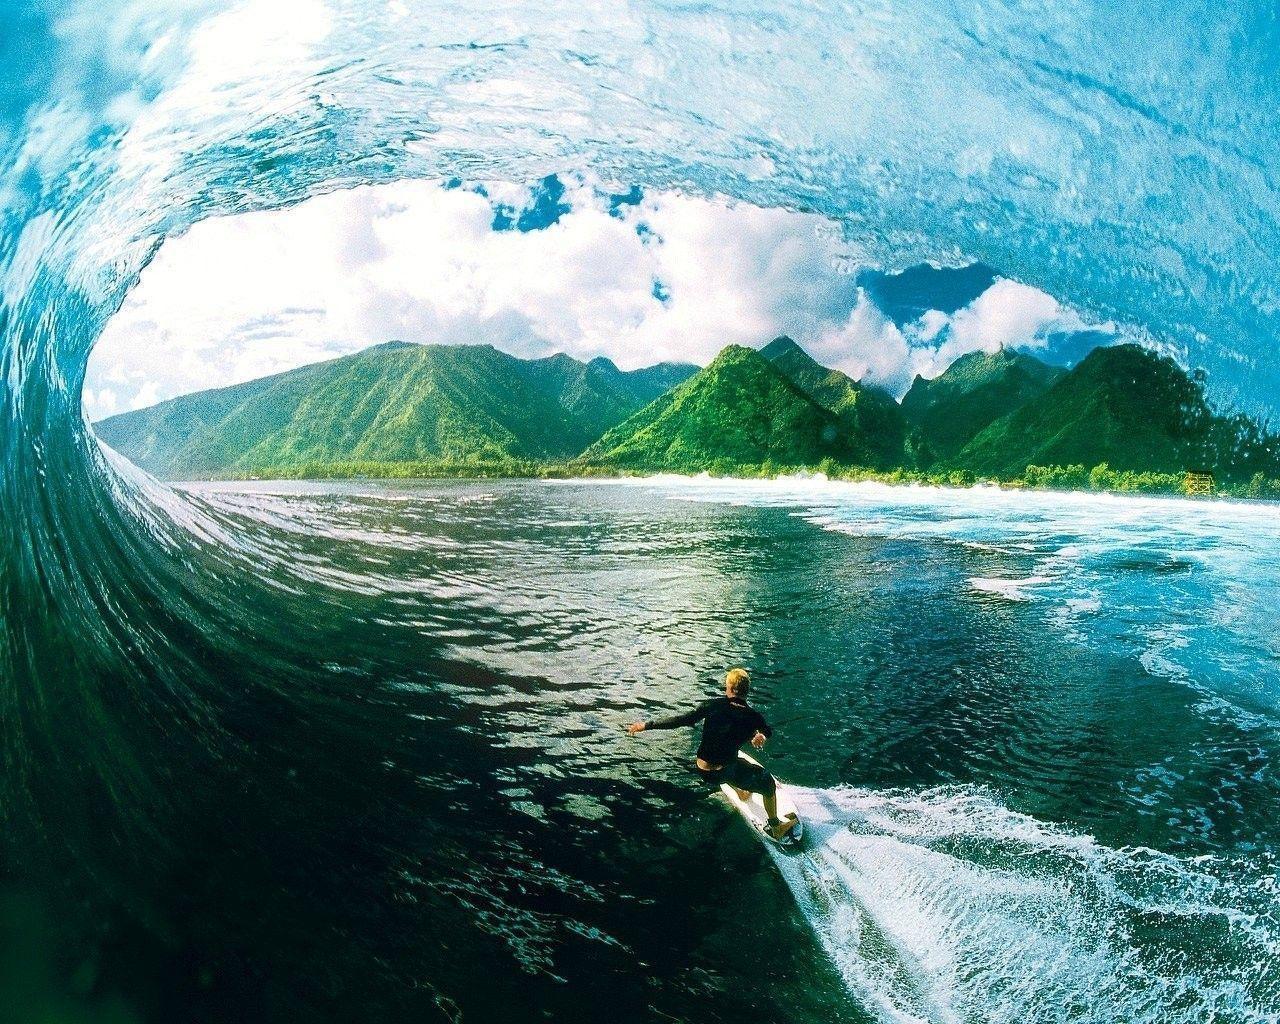 Rip Curl Surf Wallpaper